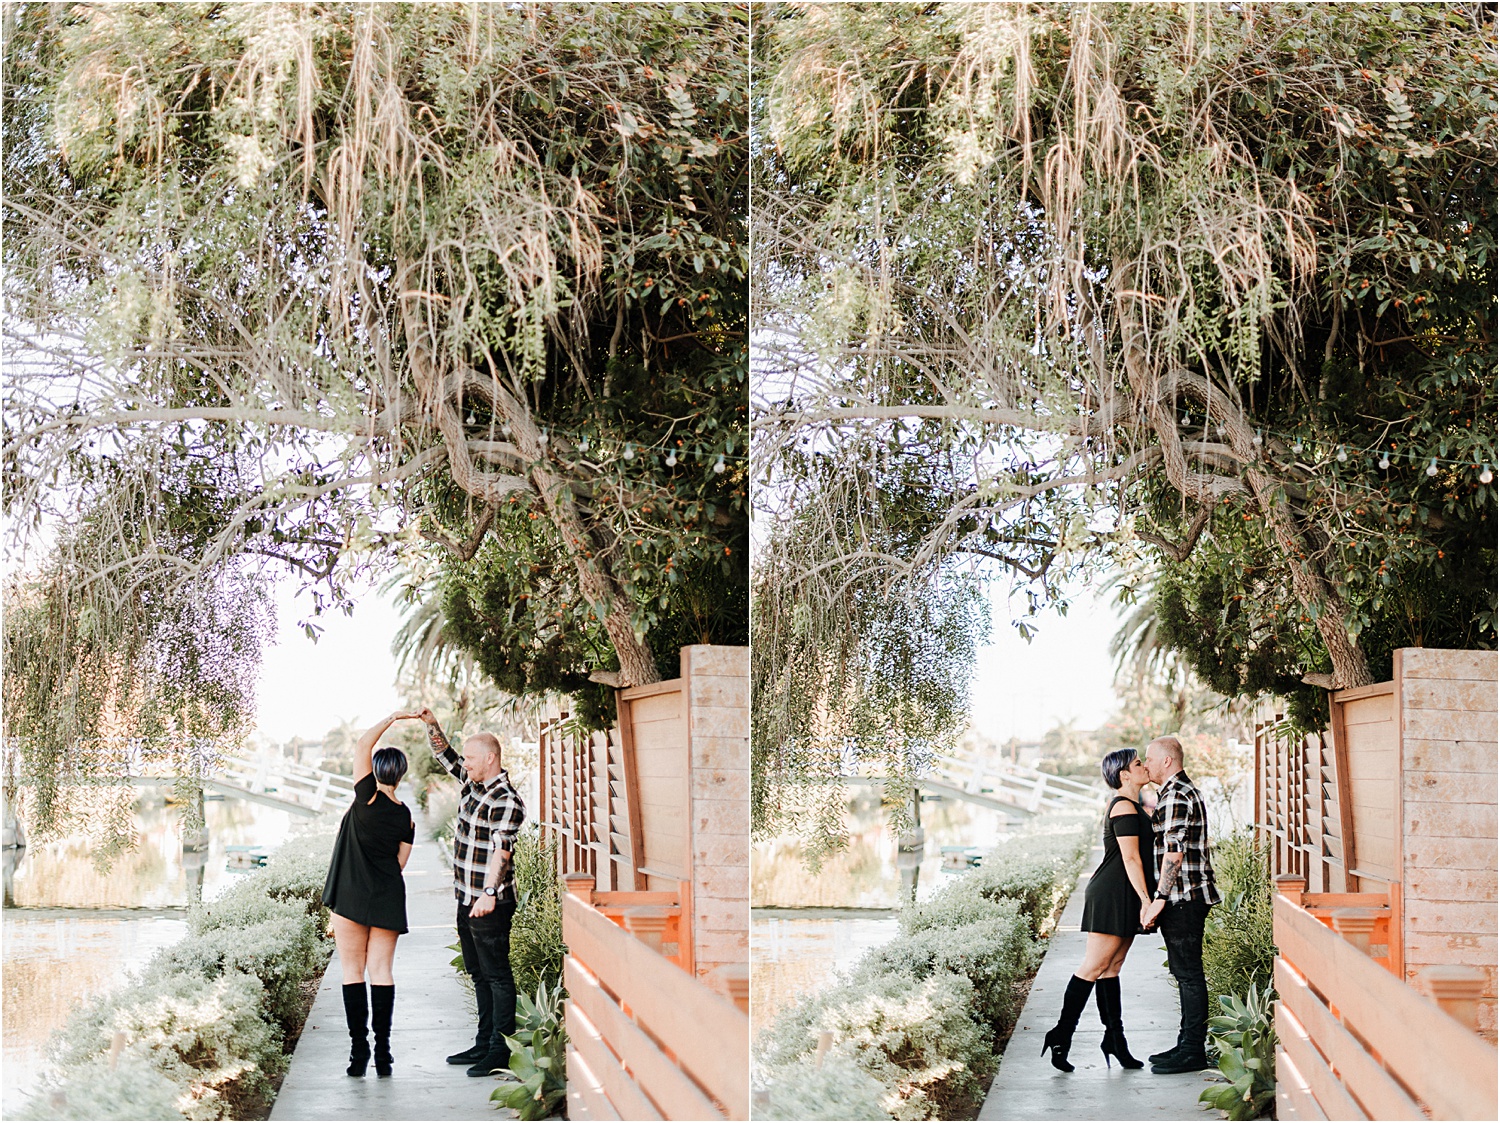 Nicole and Gareth_Venice Canals_Los Angeles Wedding Photographer0015.jpg